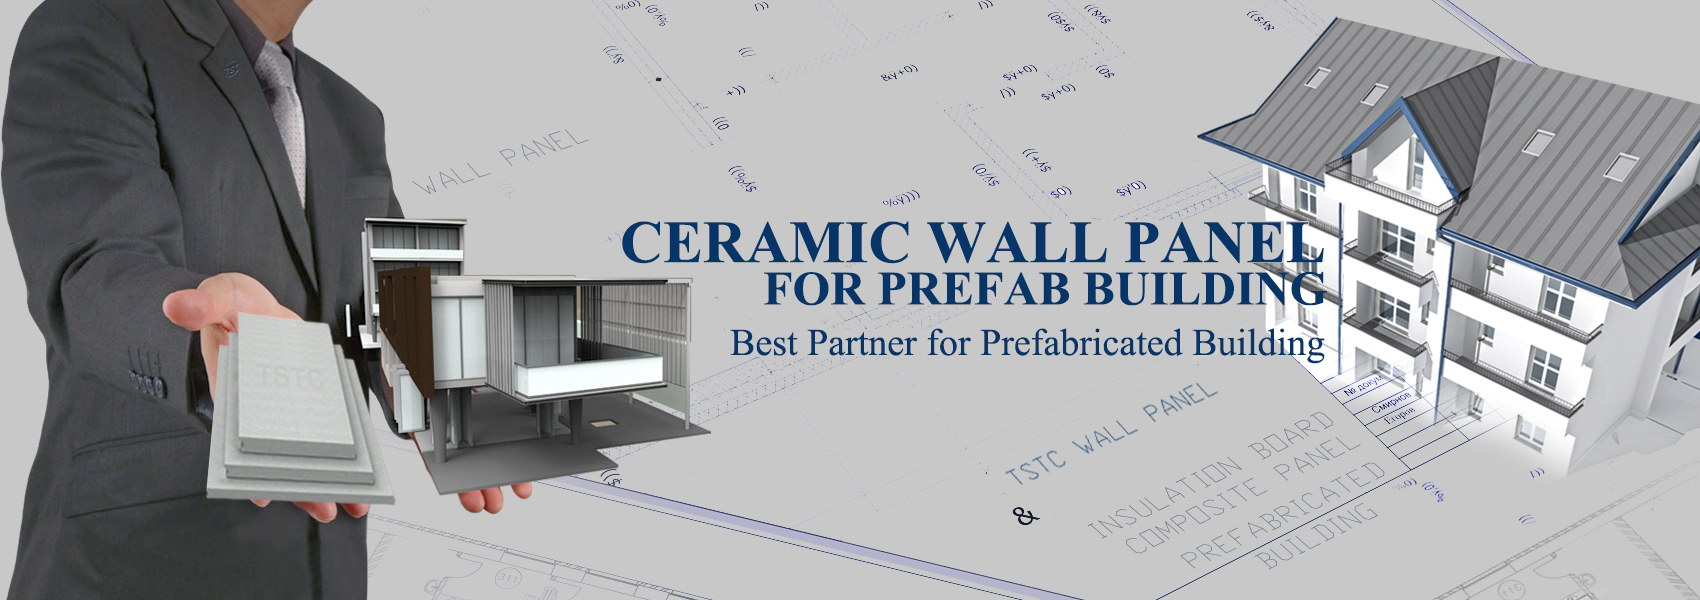 Ceramic Wall Panel for Prefab Building